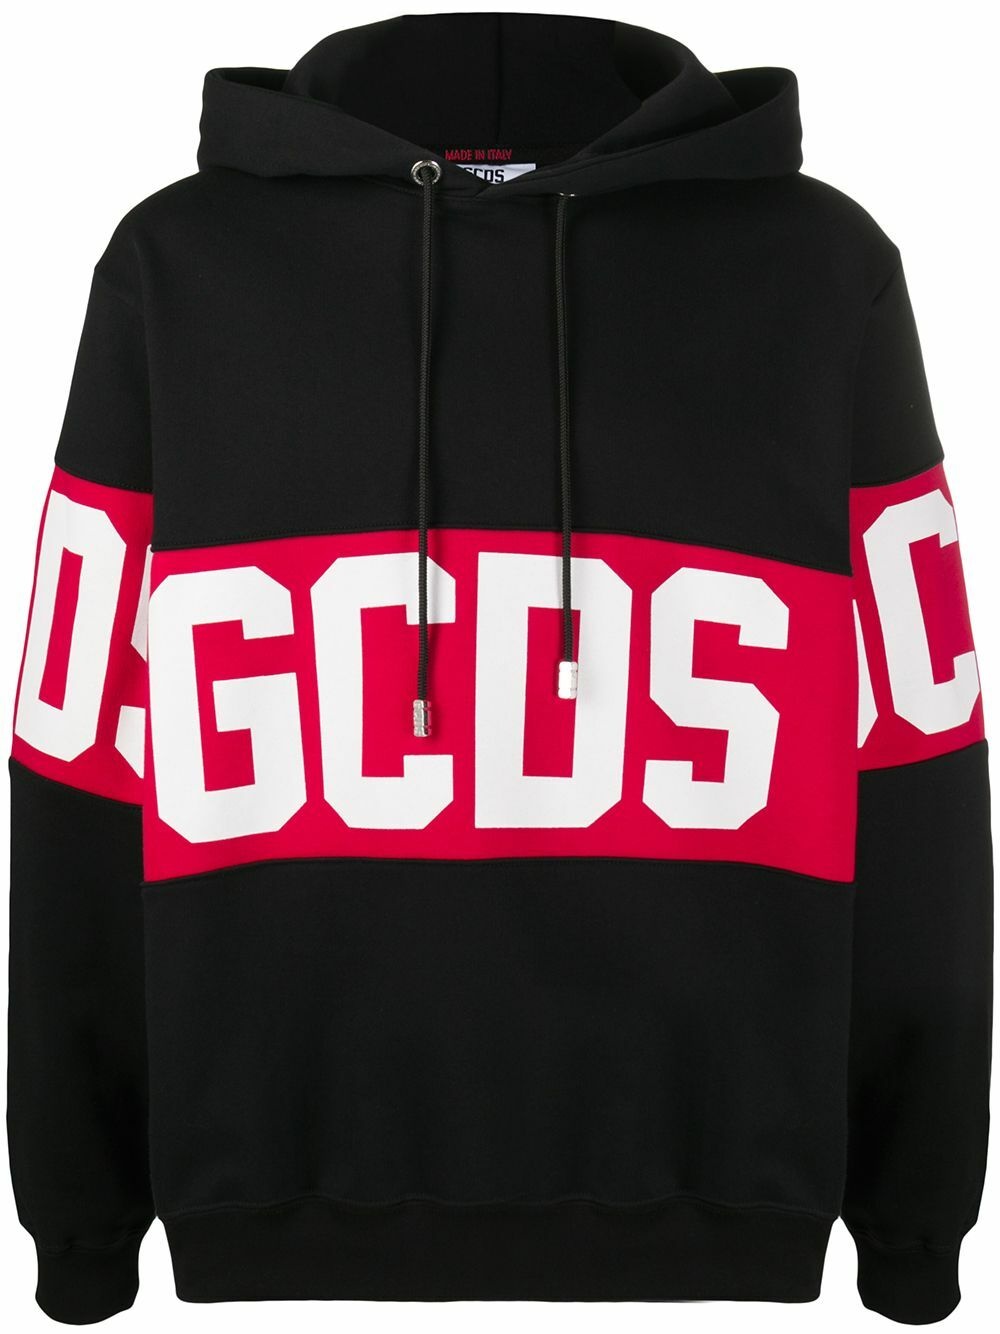 Photo: GCDS - Sweatshirt With Logo